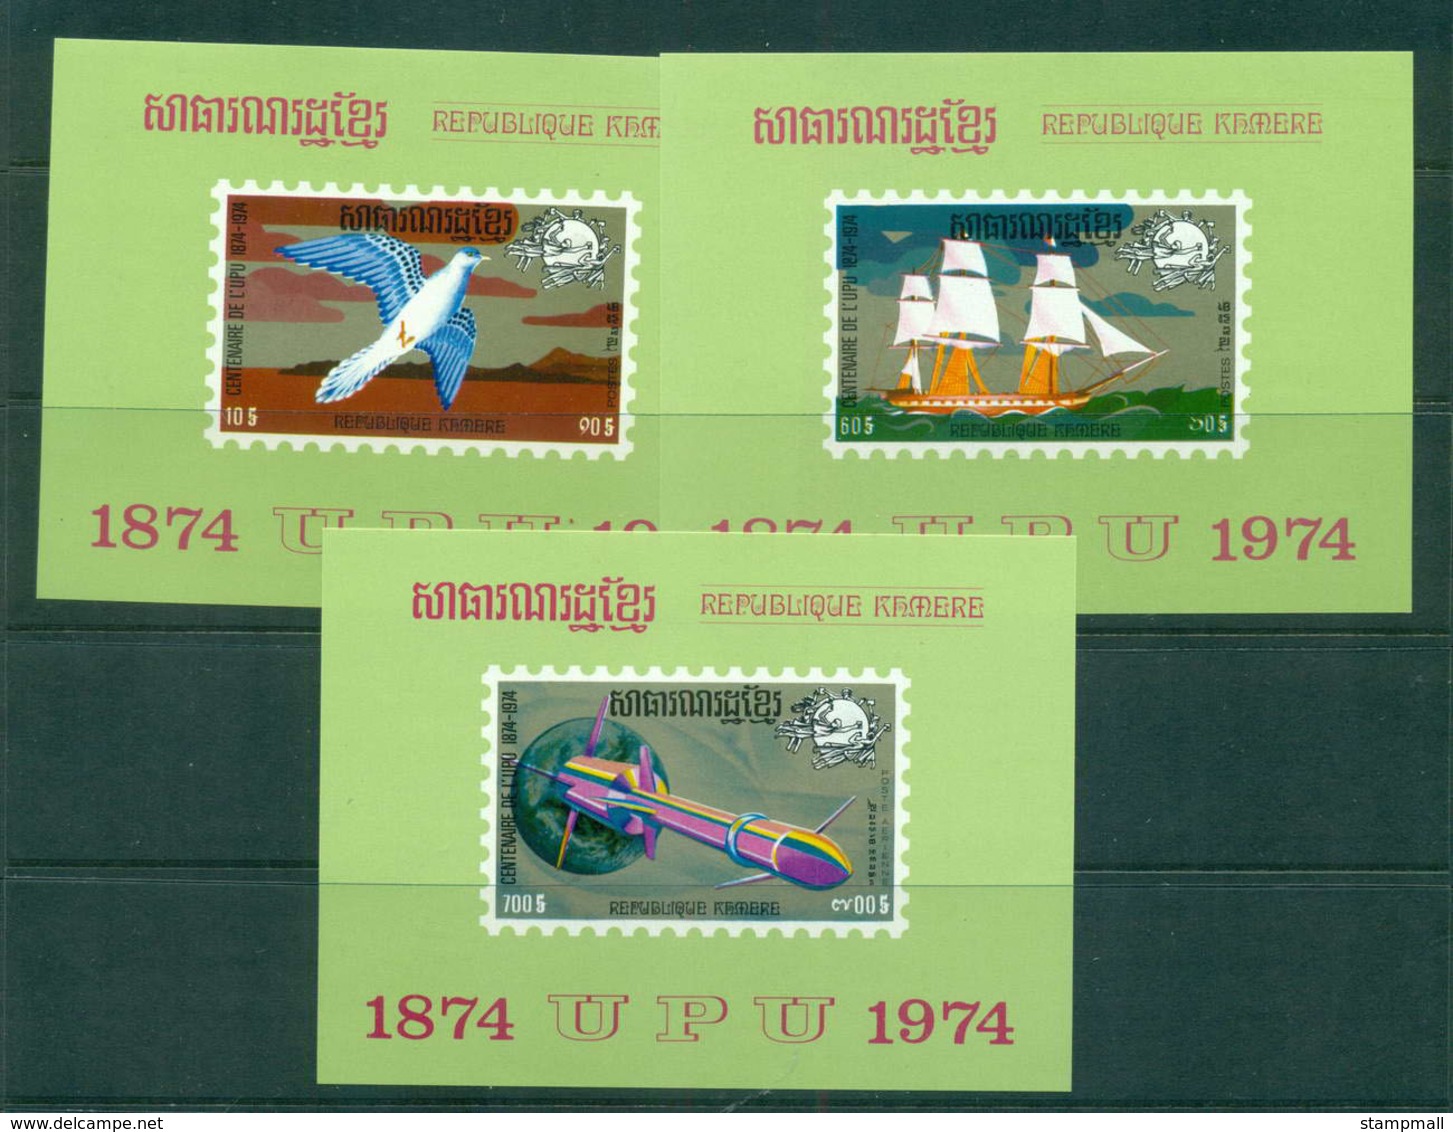 Cambodia 1974 UPU Centenary MPERF 3x MS MUH Lot56565 - Cambodia